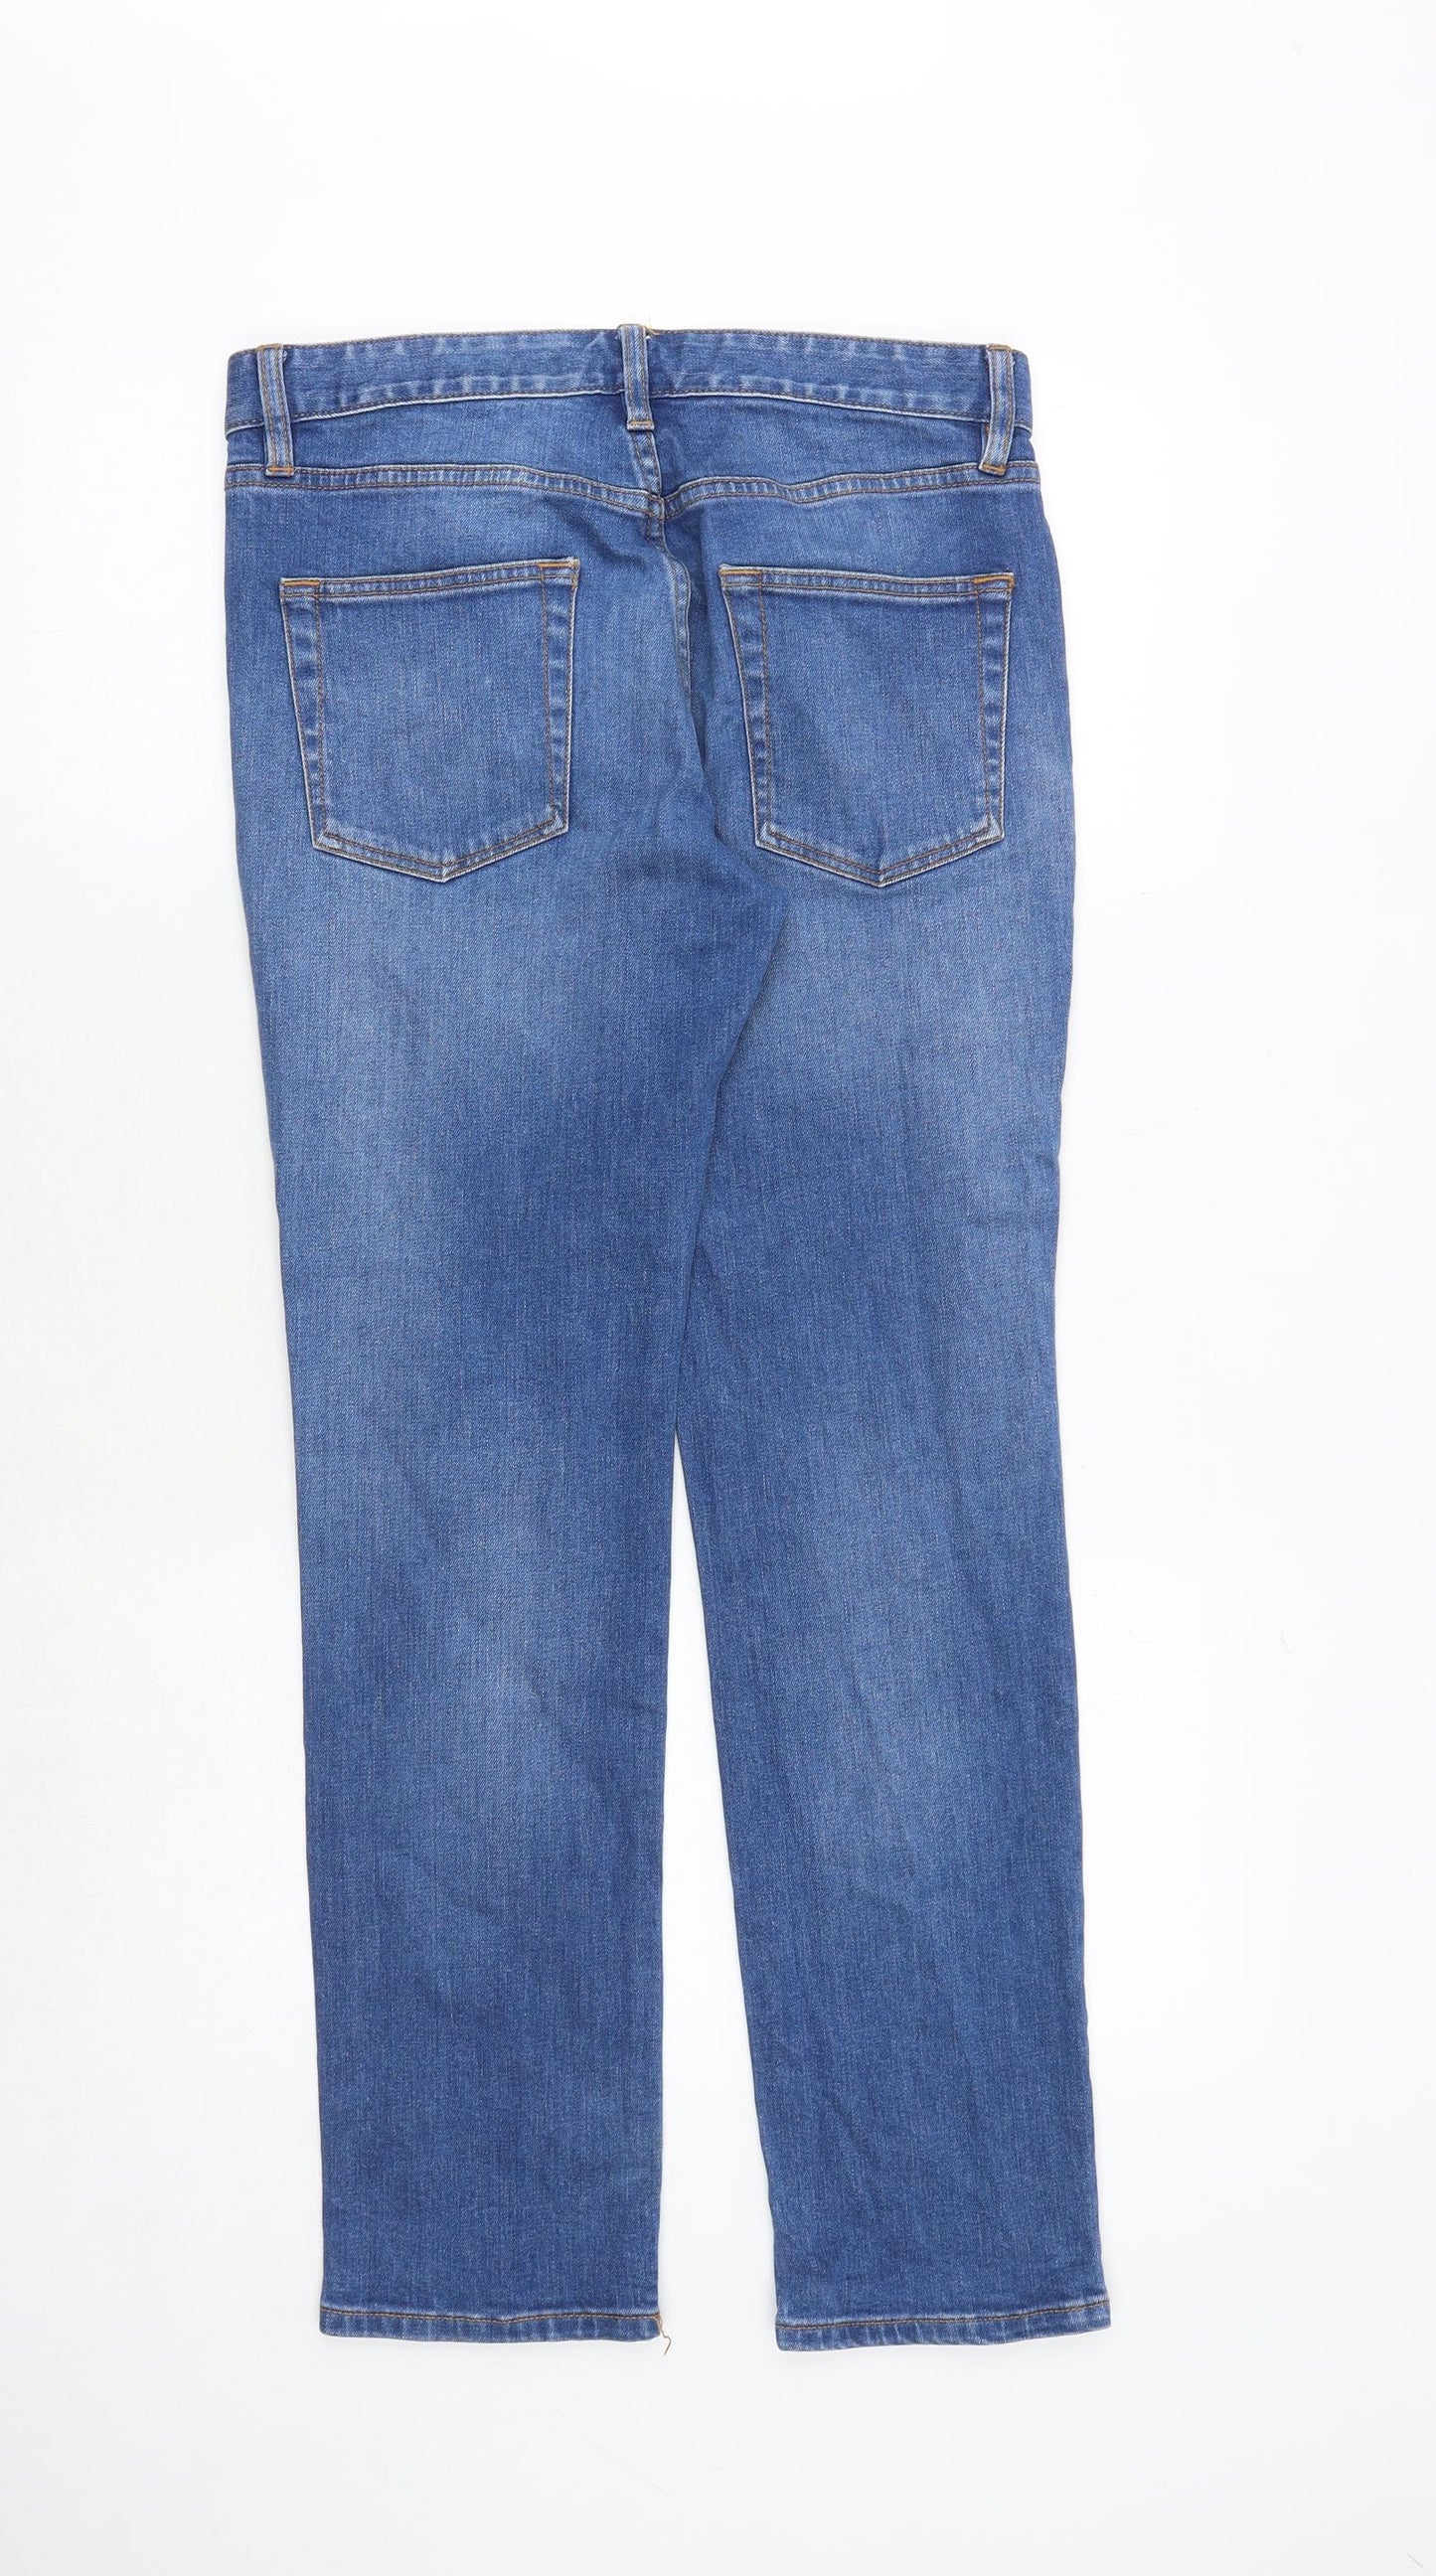 Topman Mens Blue Cotton Straight Jeans Size 30 in Regular Button - Short